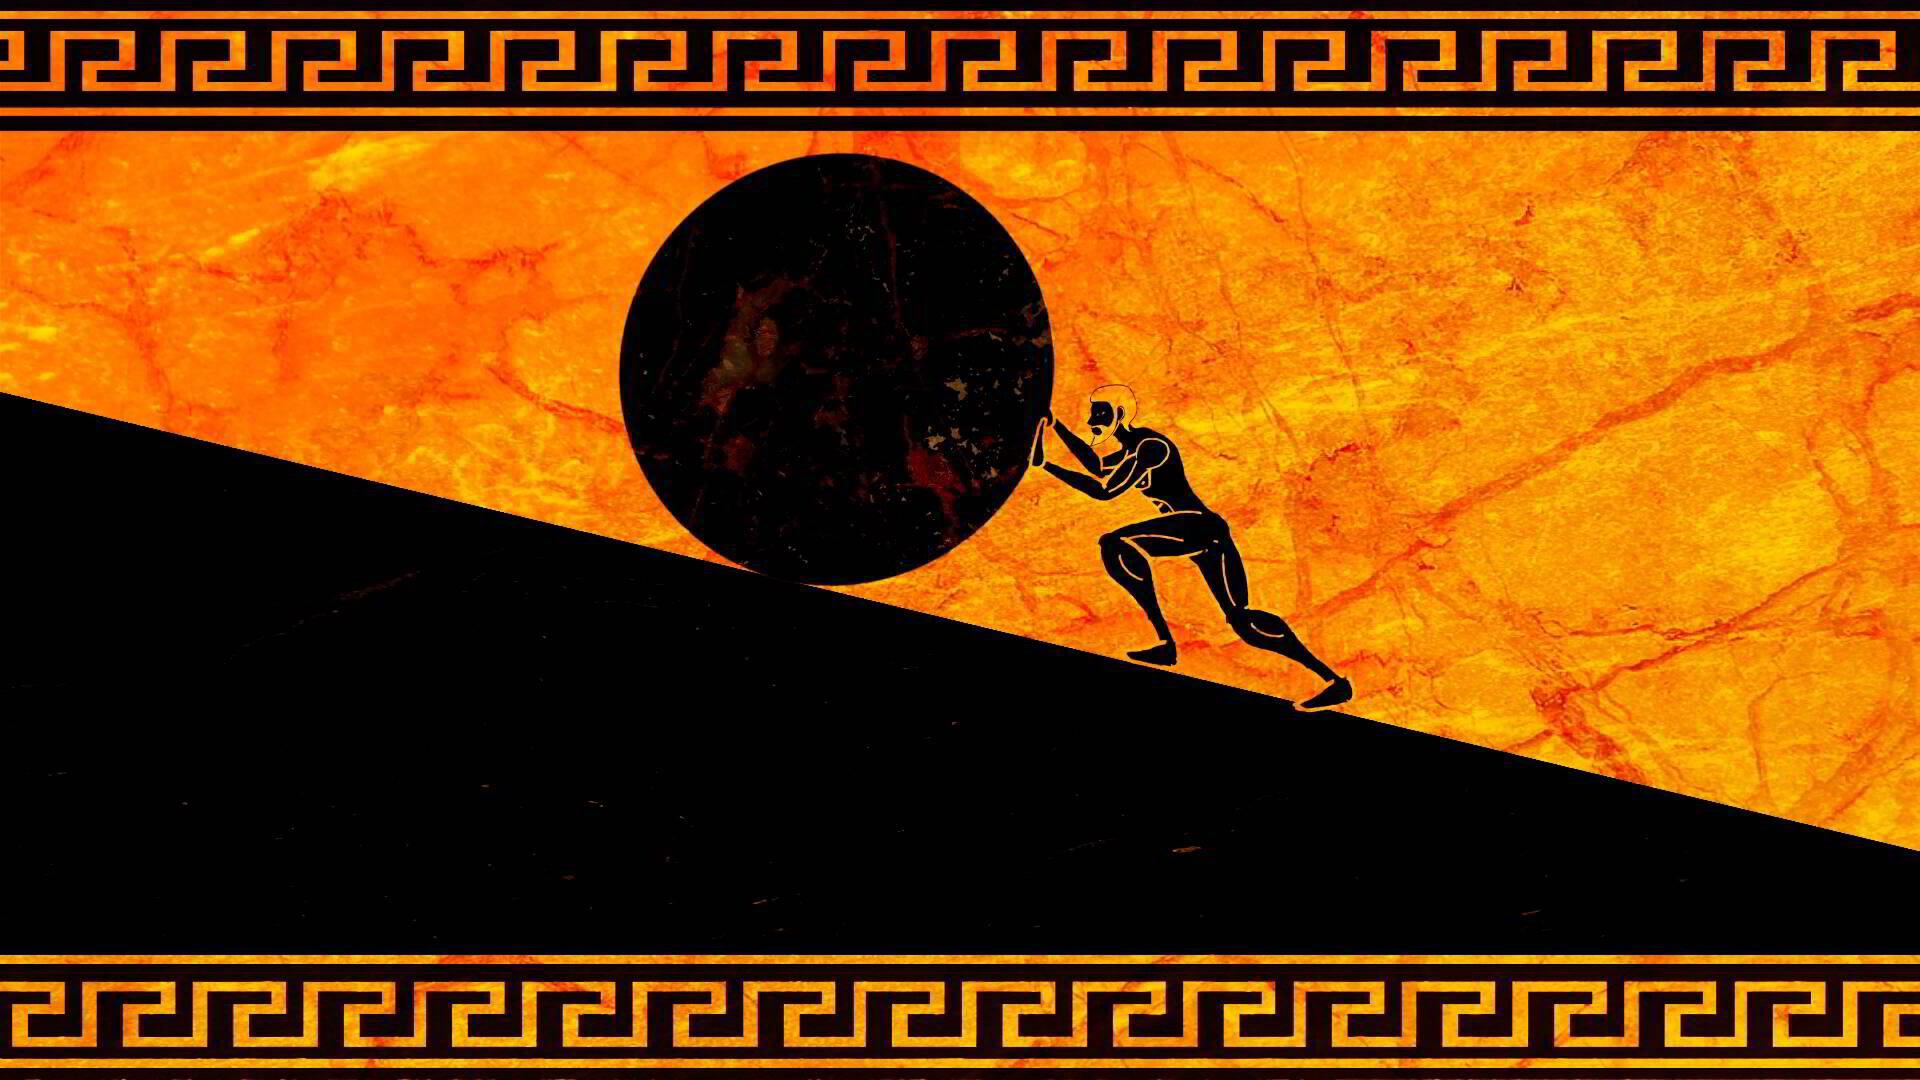 Sisyphus Wallpapers - Top Free Sisyphus Backgrounds - WallpaperAccess